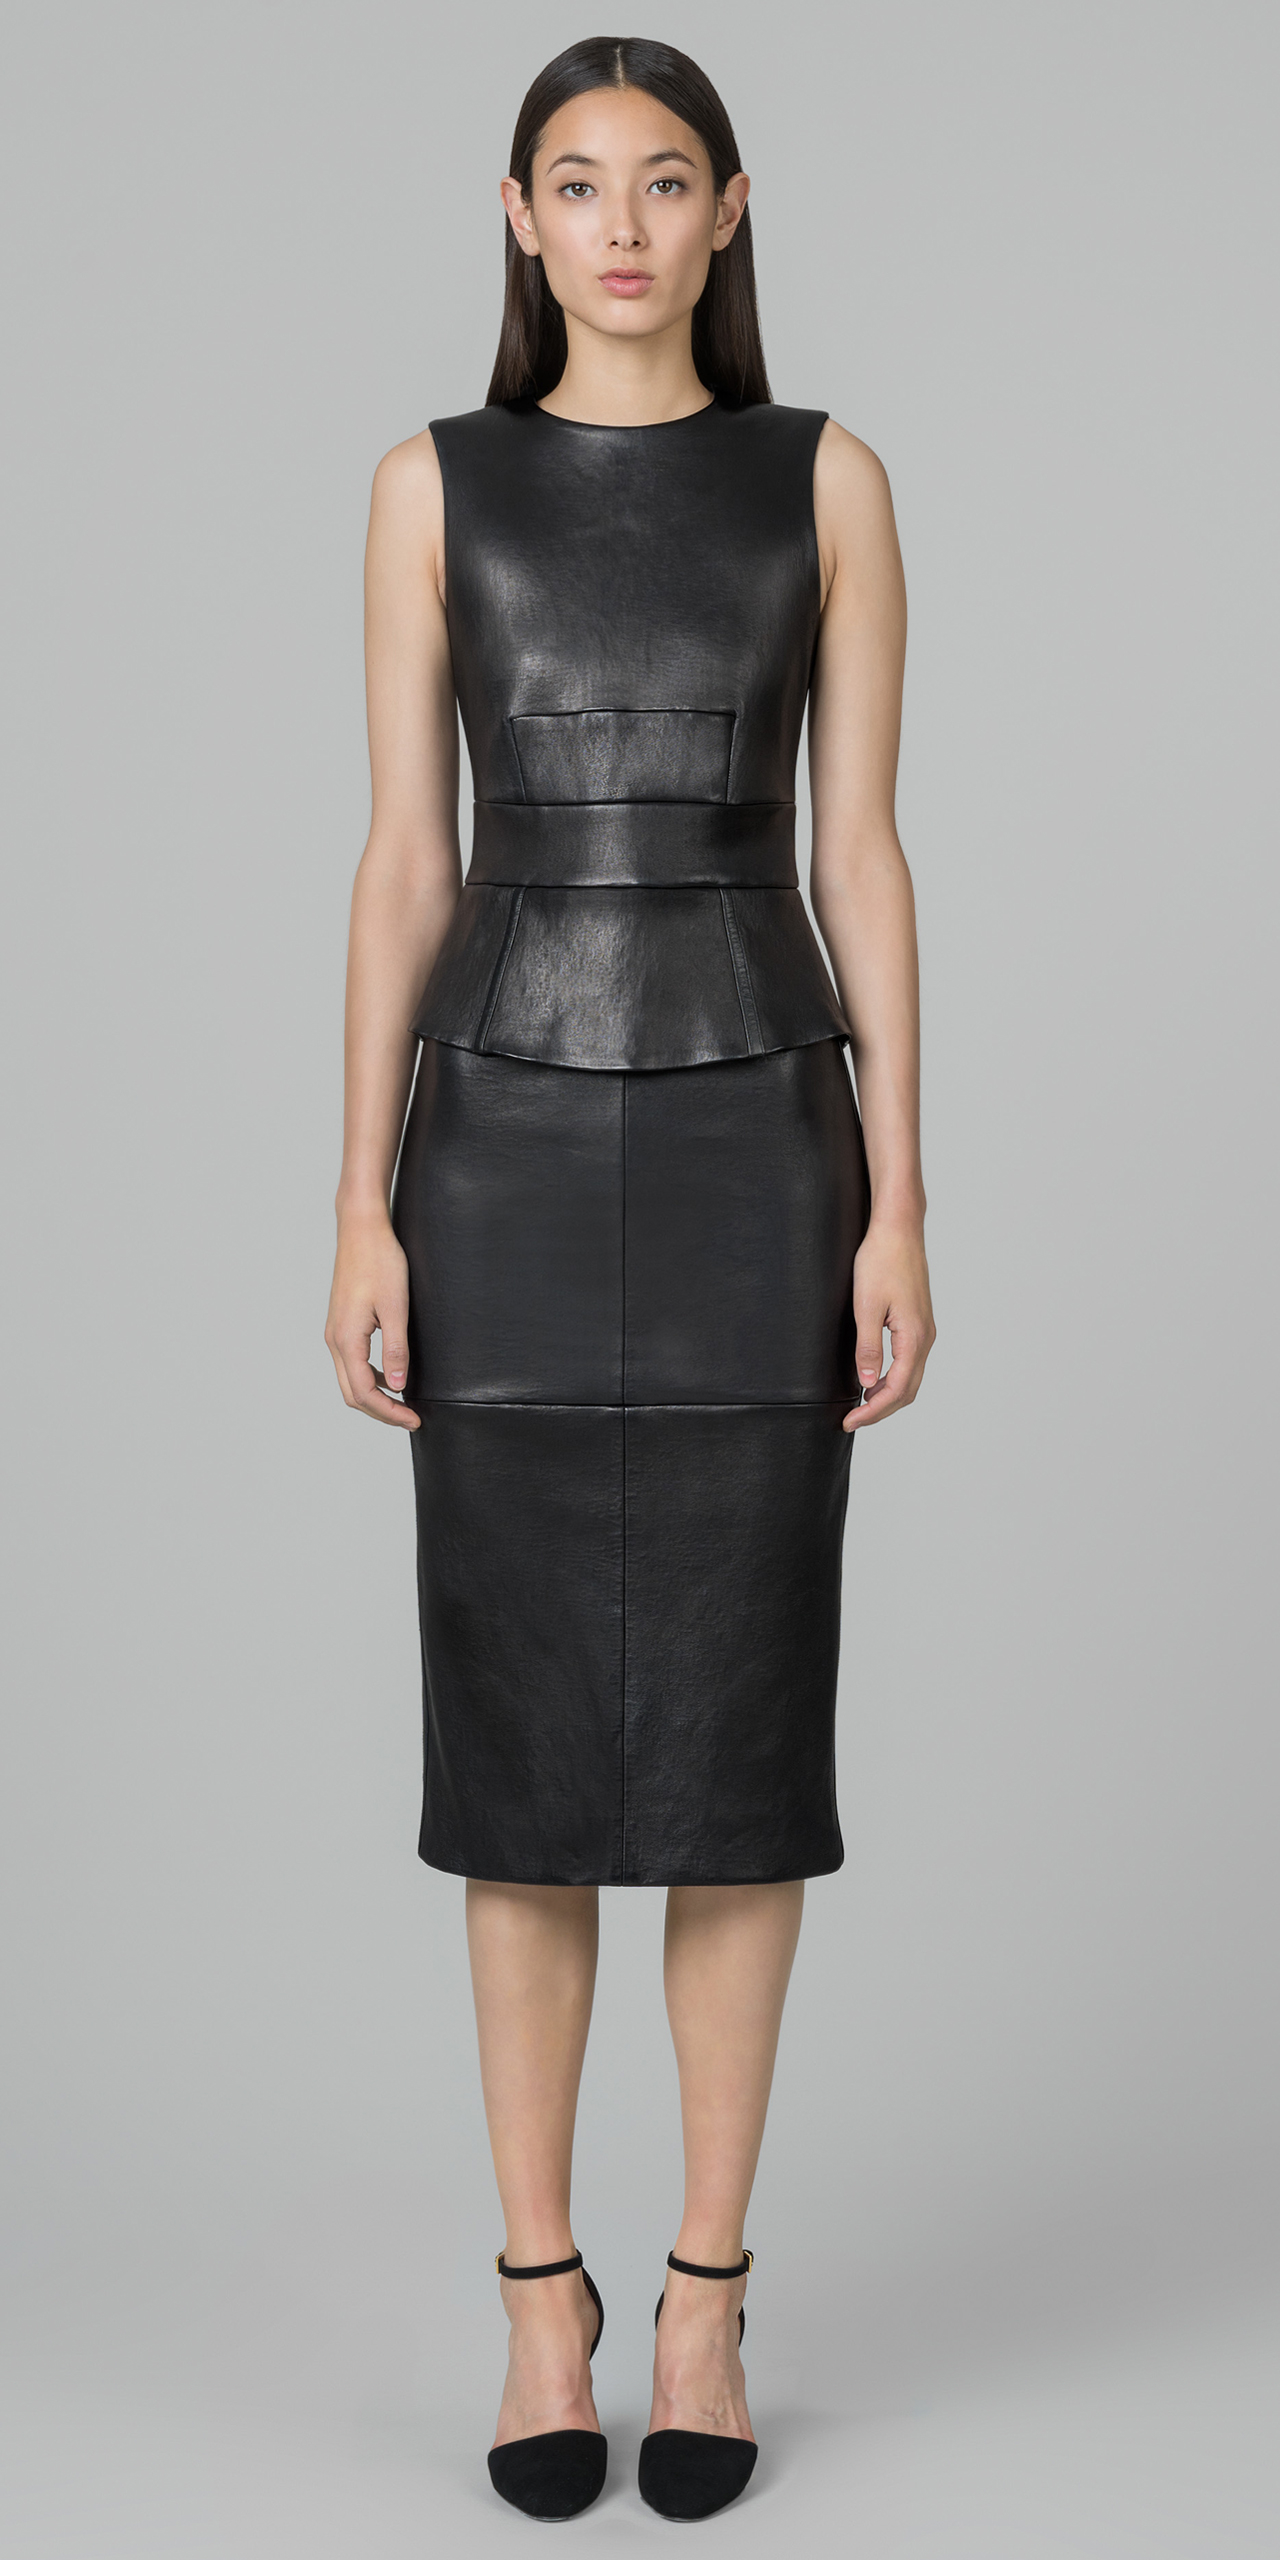 Lyst Kimora Lee Simmons Leather Peplum Dress In Black 